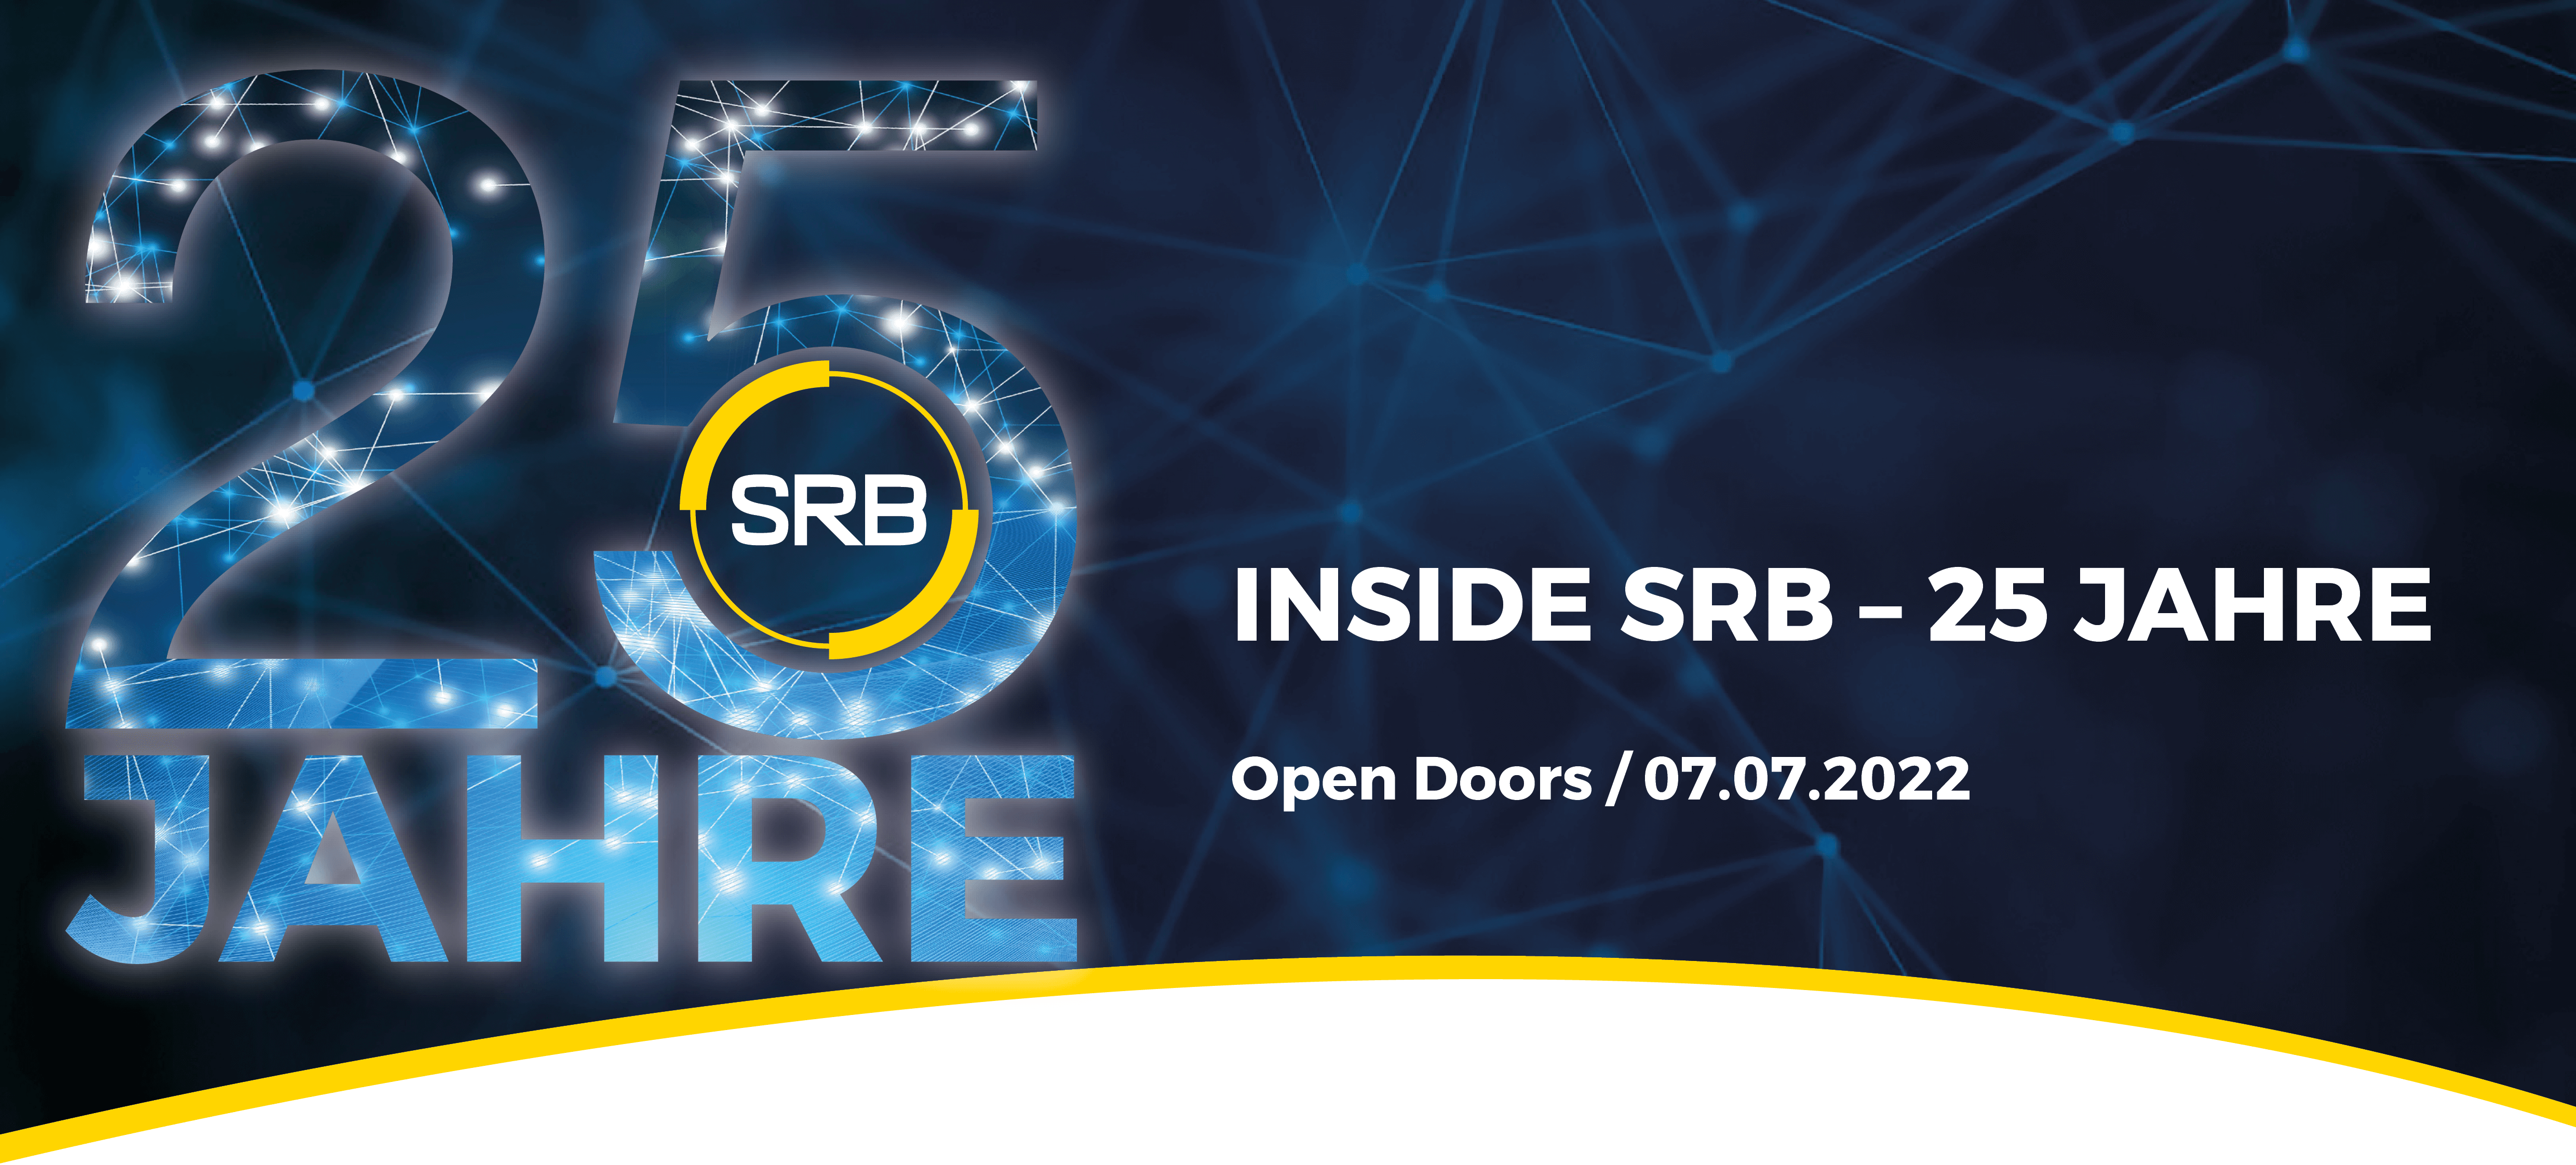 Inside SRB - 25 Jahre